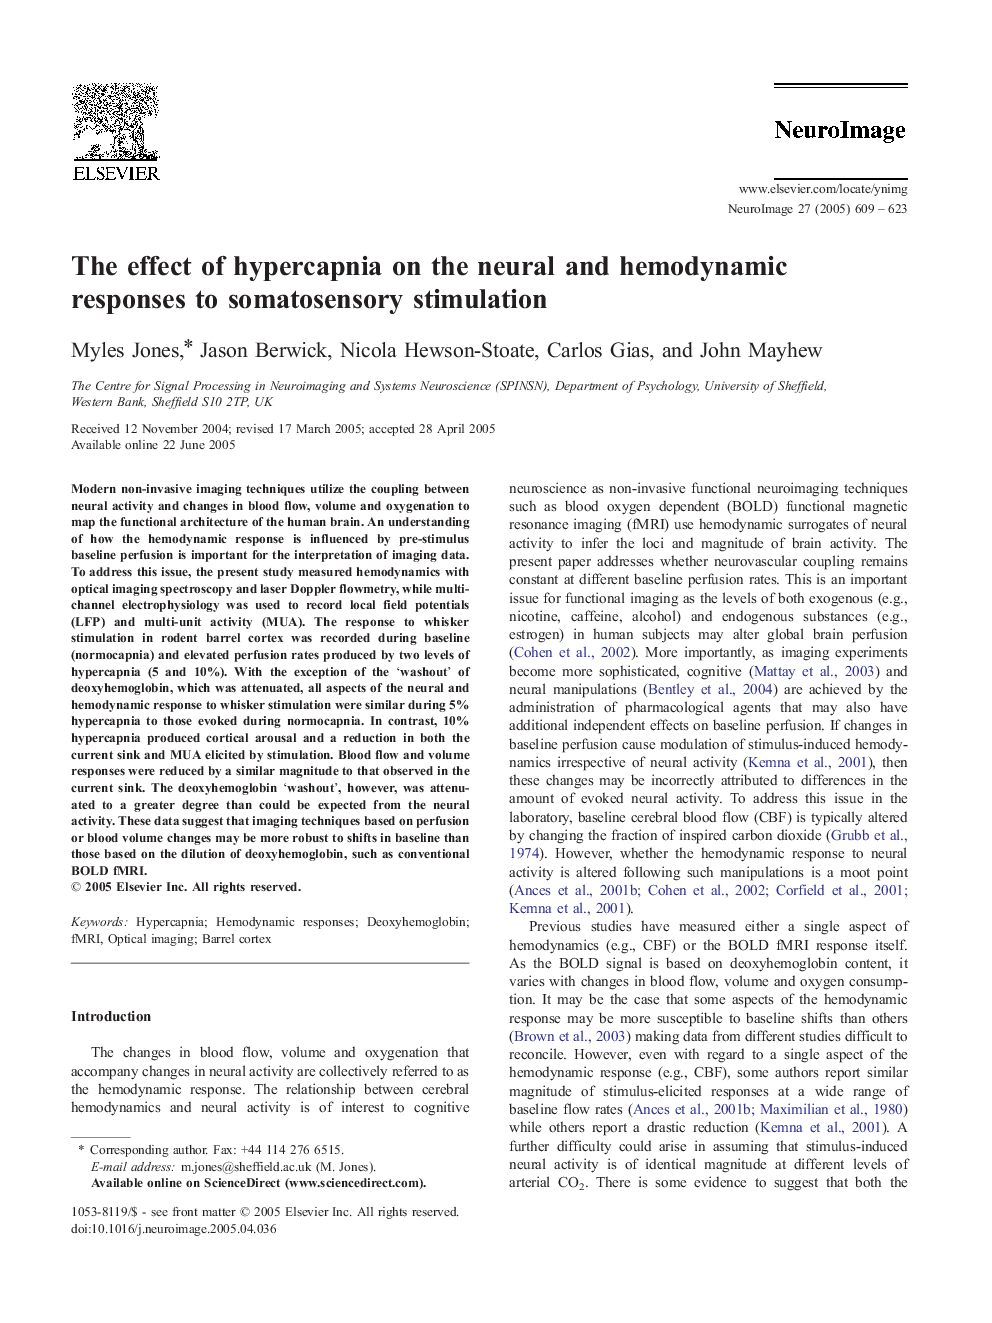 The effect of hypercapnia on the neural and hemodynamic responses to somatosensory stimulation